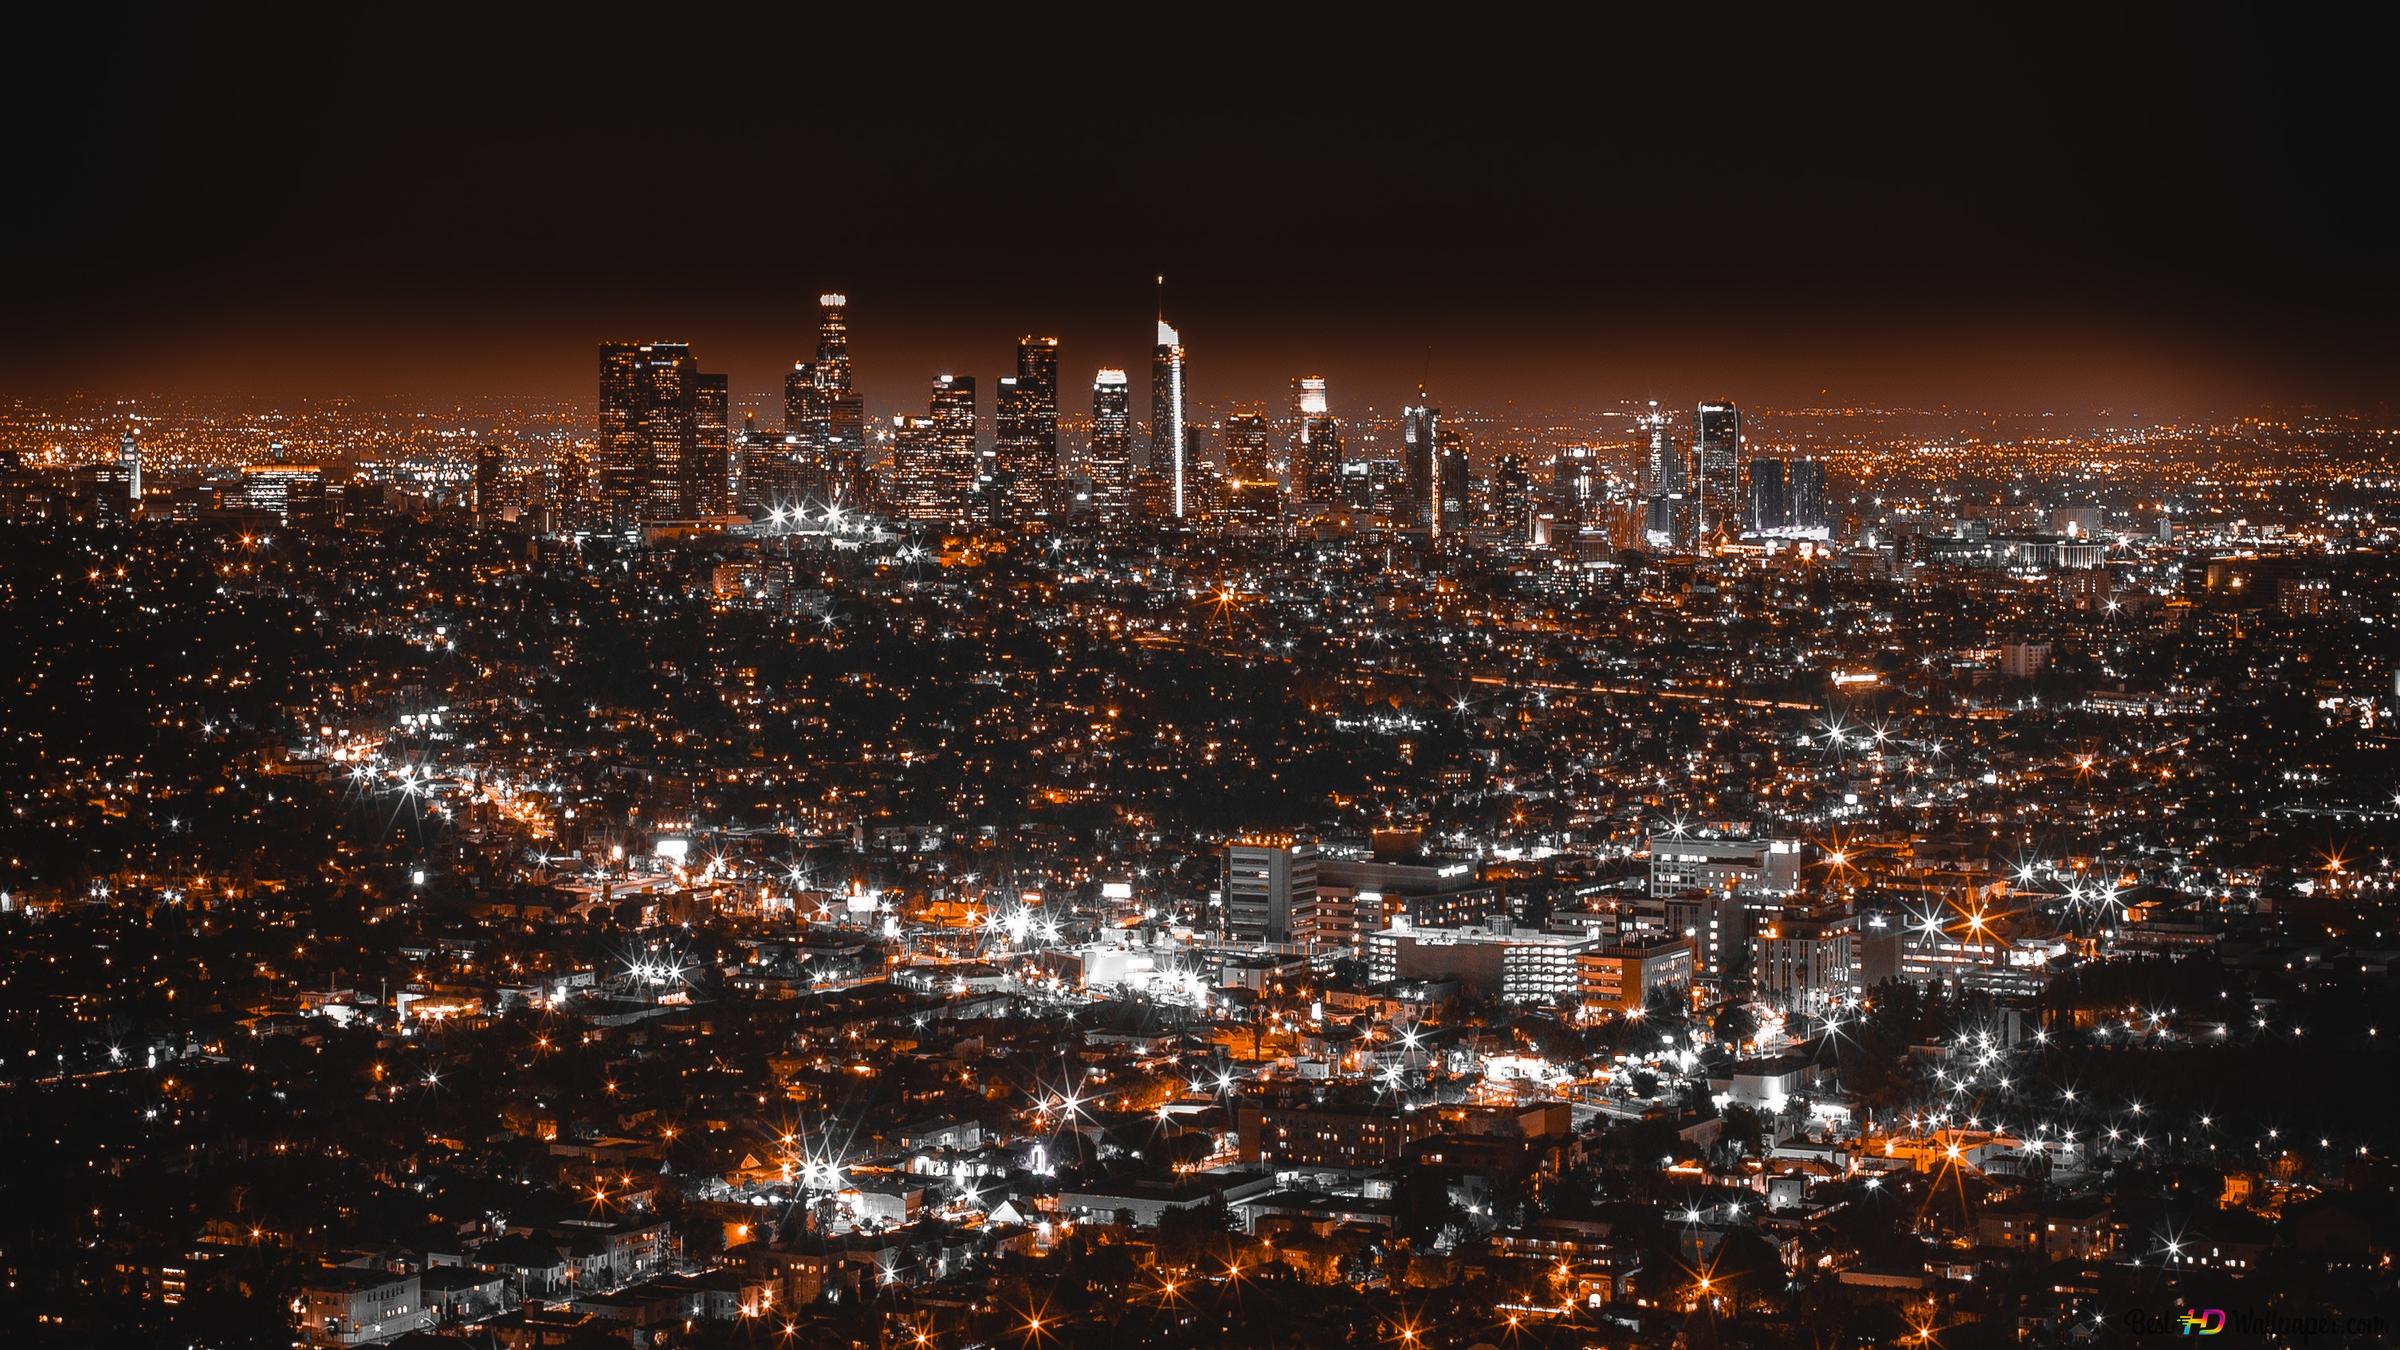 Los Angeles City Night View 2K wallpaper download